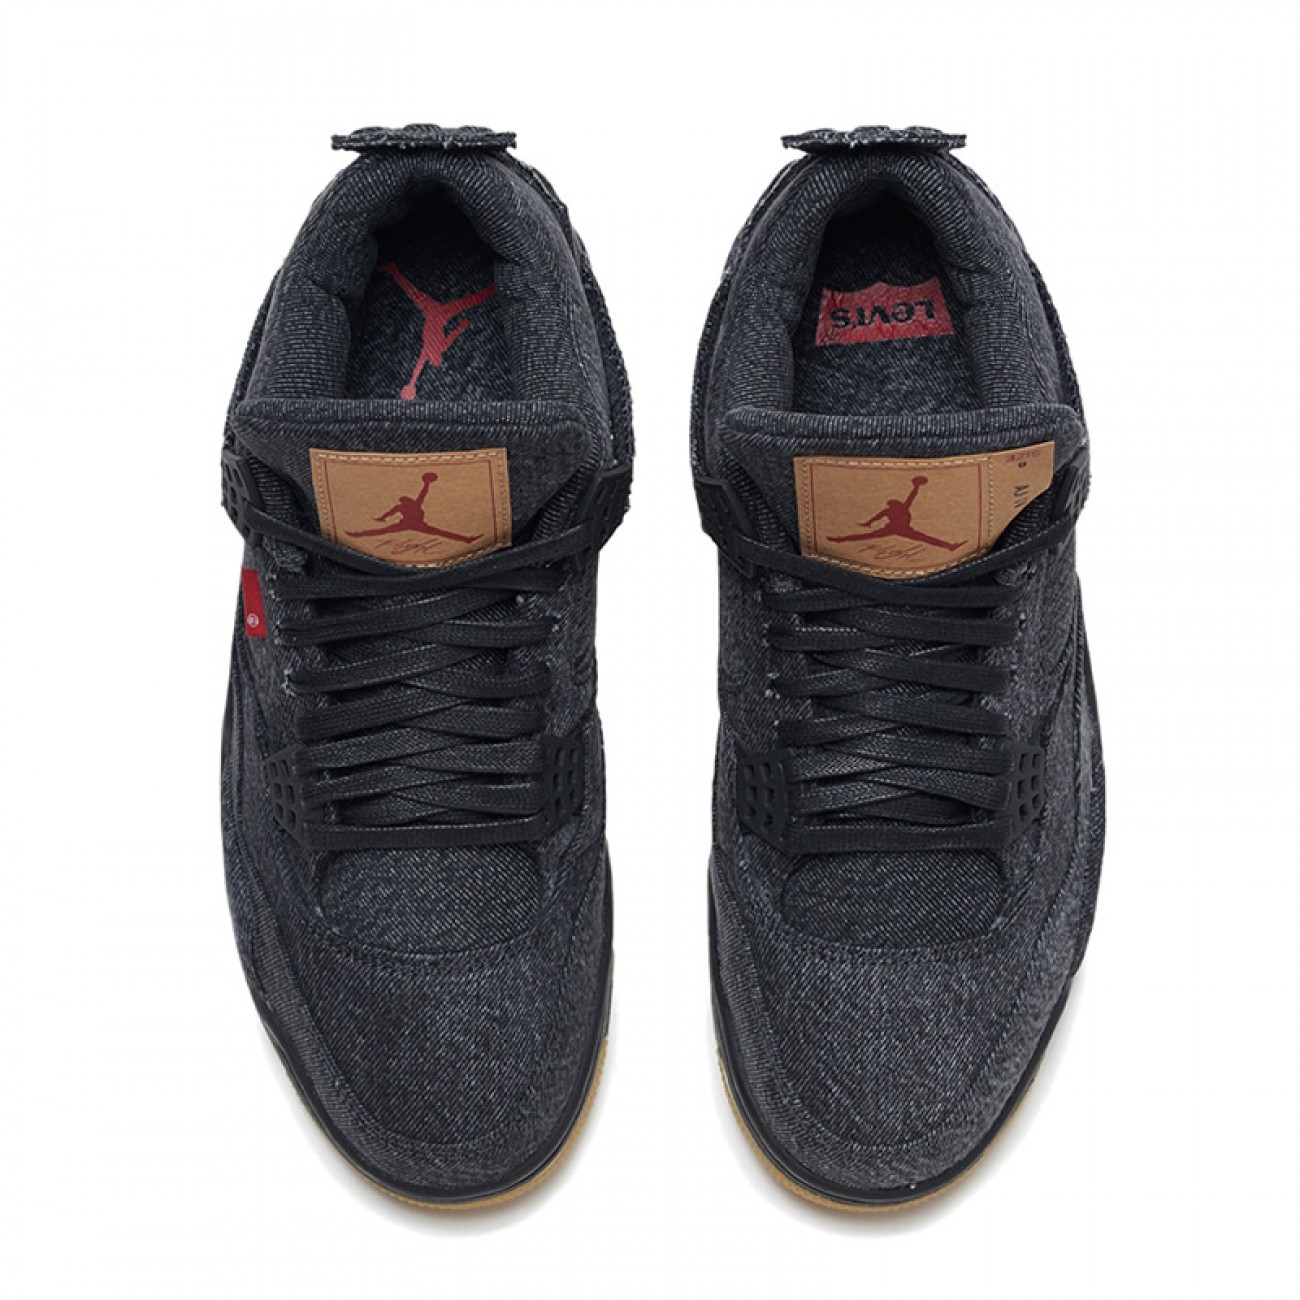 Levi's x Air Jordan 4 "Black Denim" AO2571-001